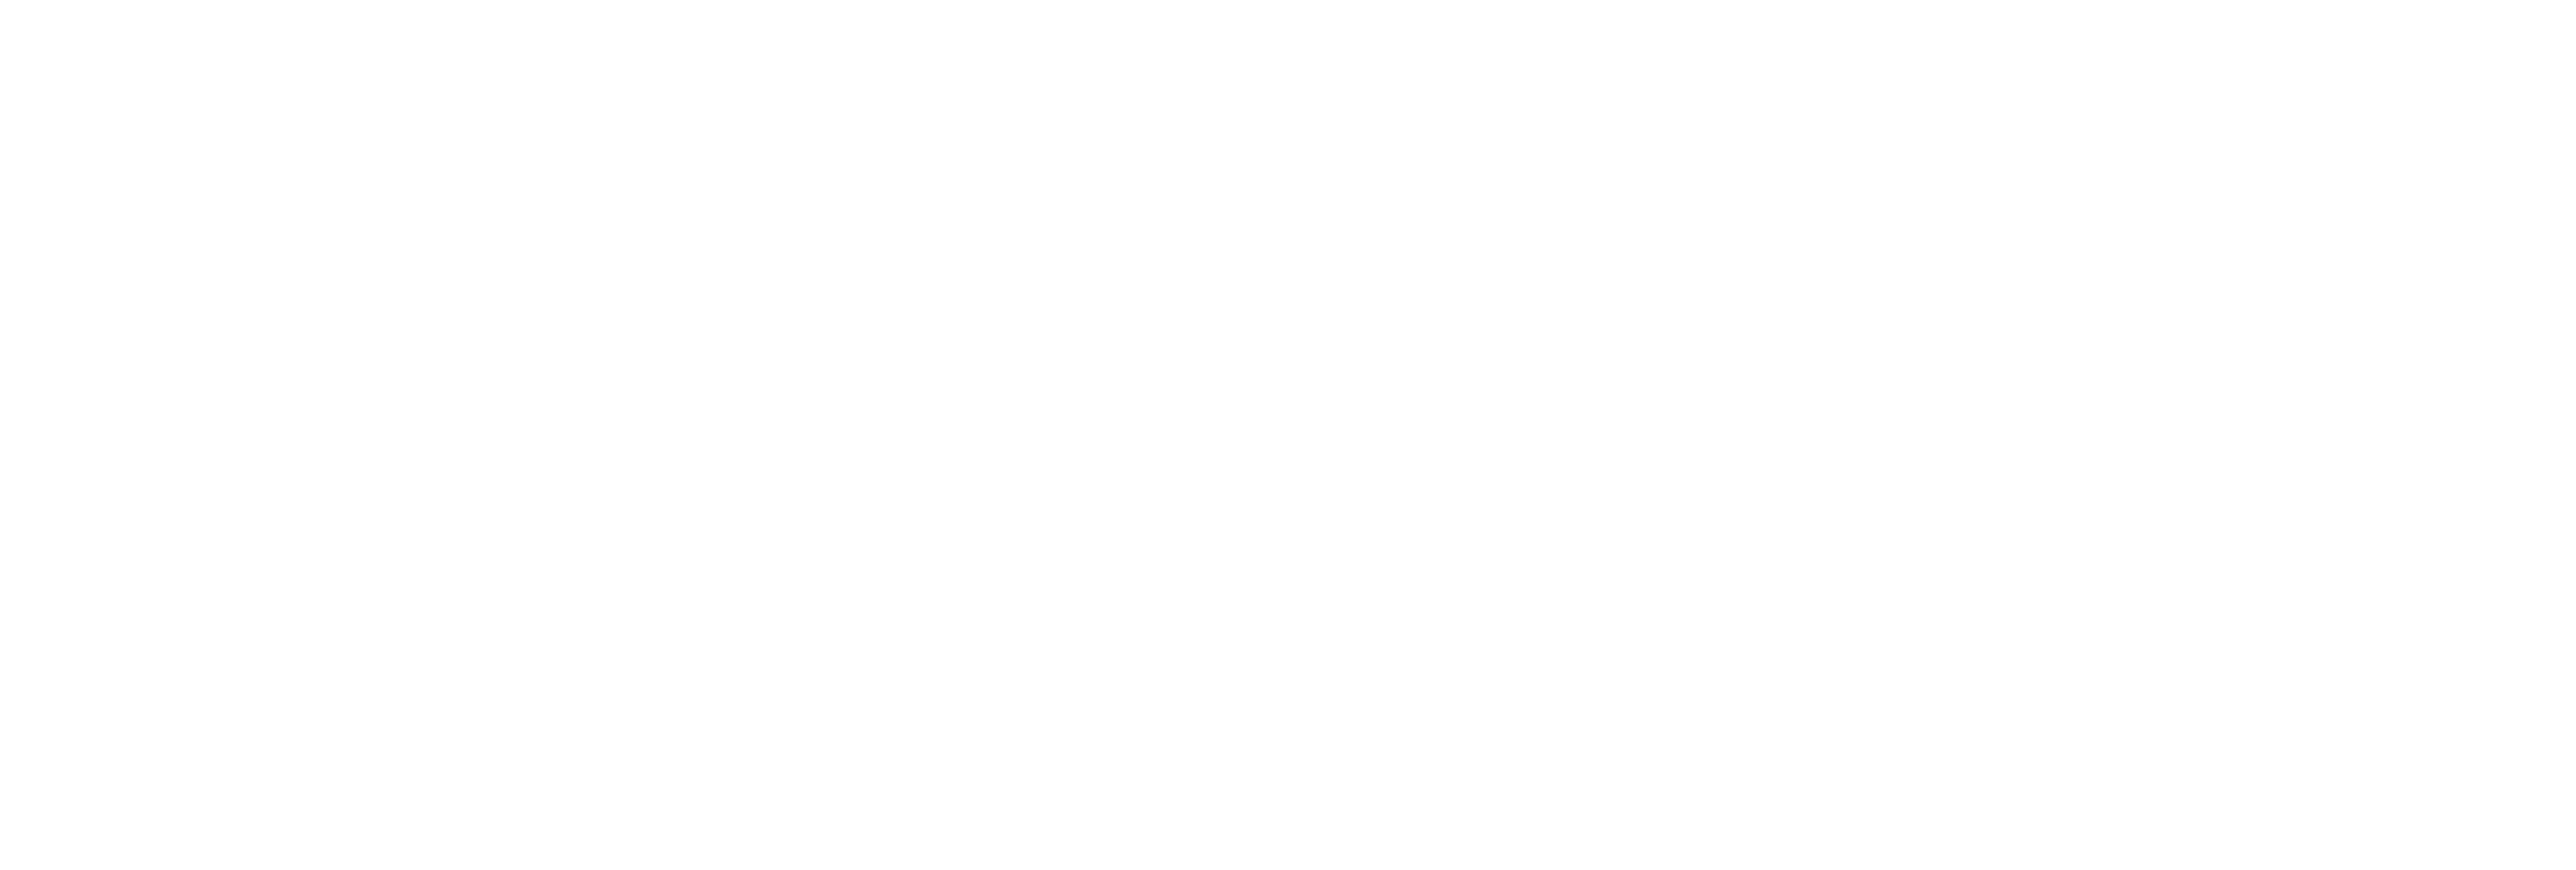 AniCura Manlleu Clínica Veterinària logo